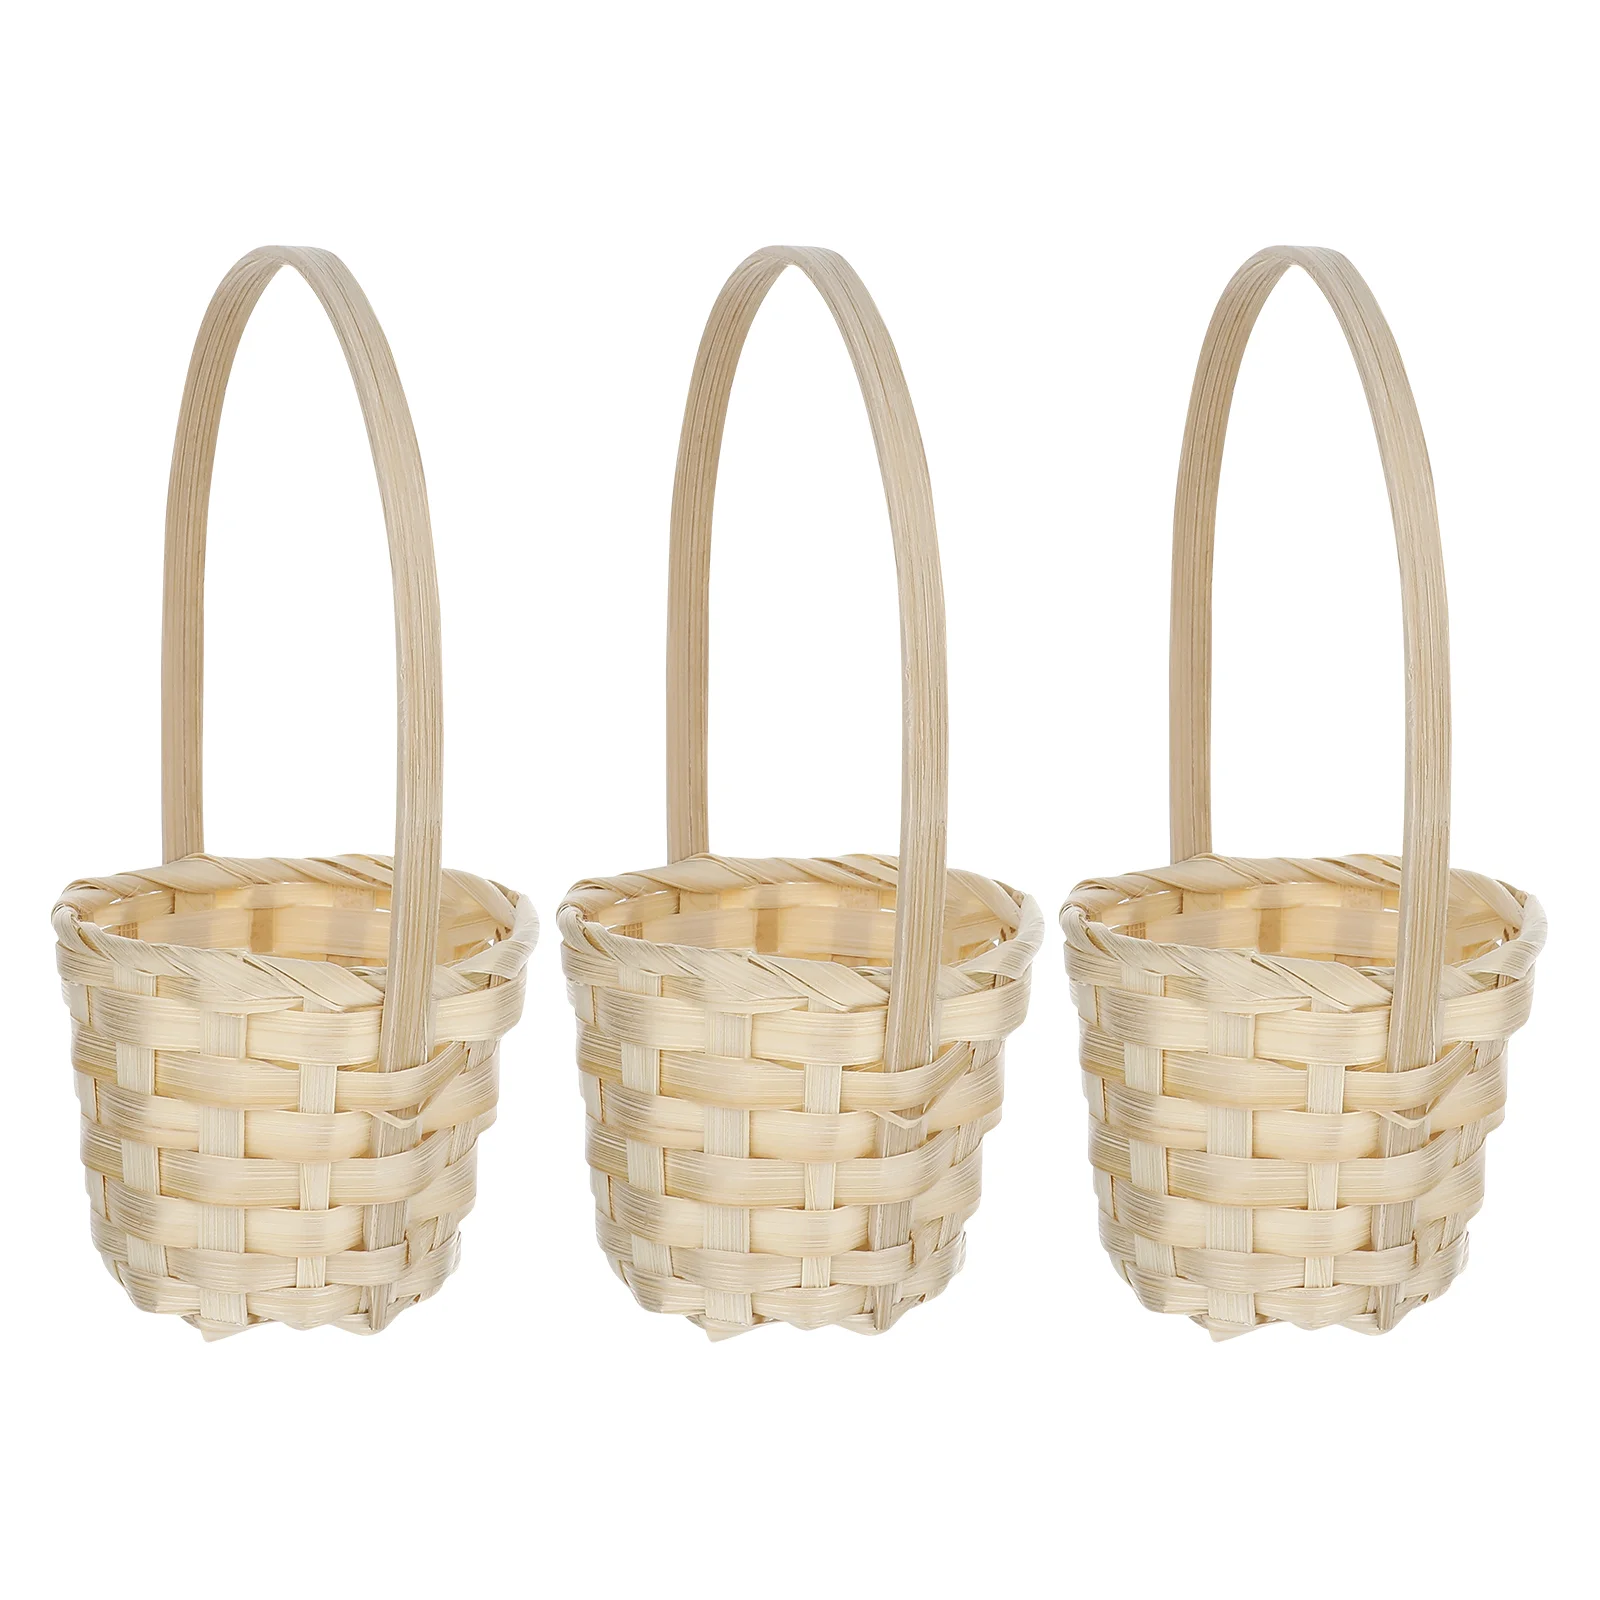 Fruit Holder Flower Basket Handle Bamboo Decorative Gift Baskets Empty Gifts Wicker Storage